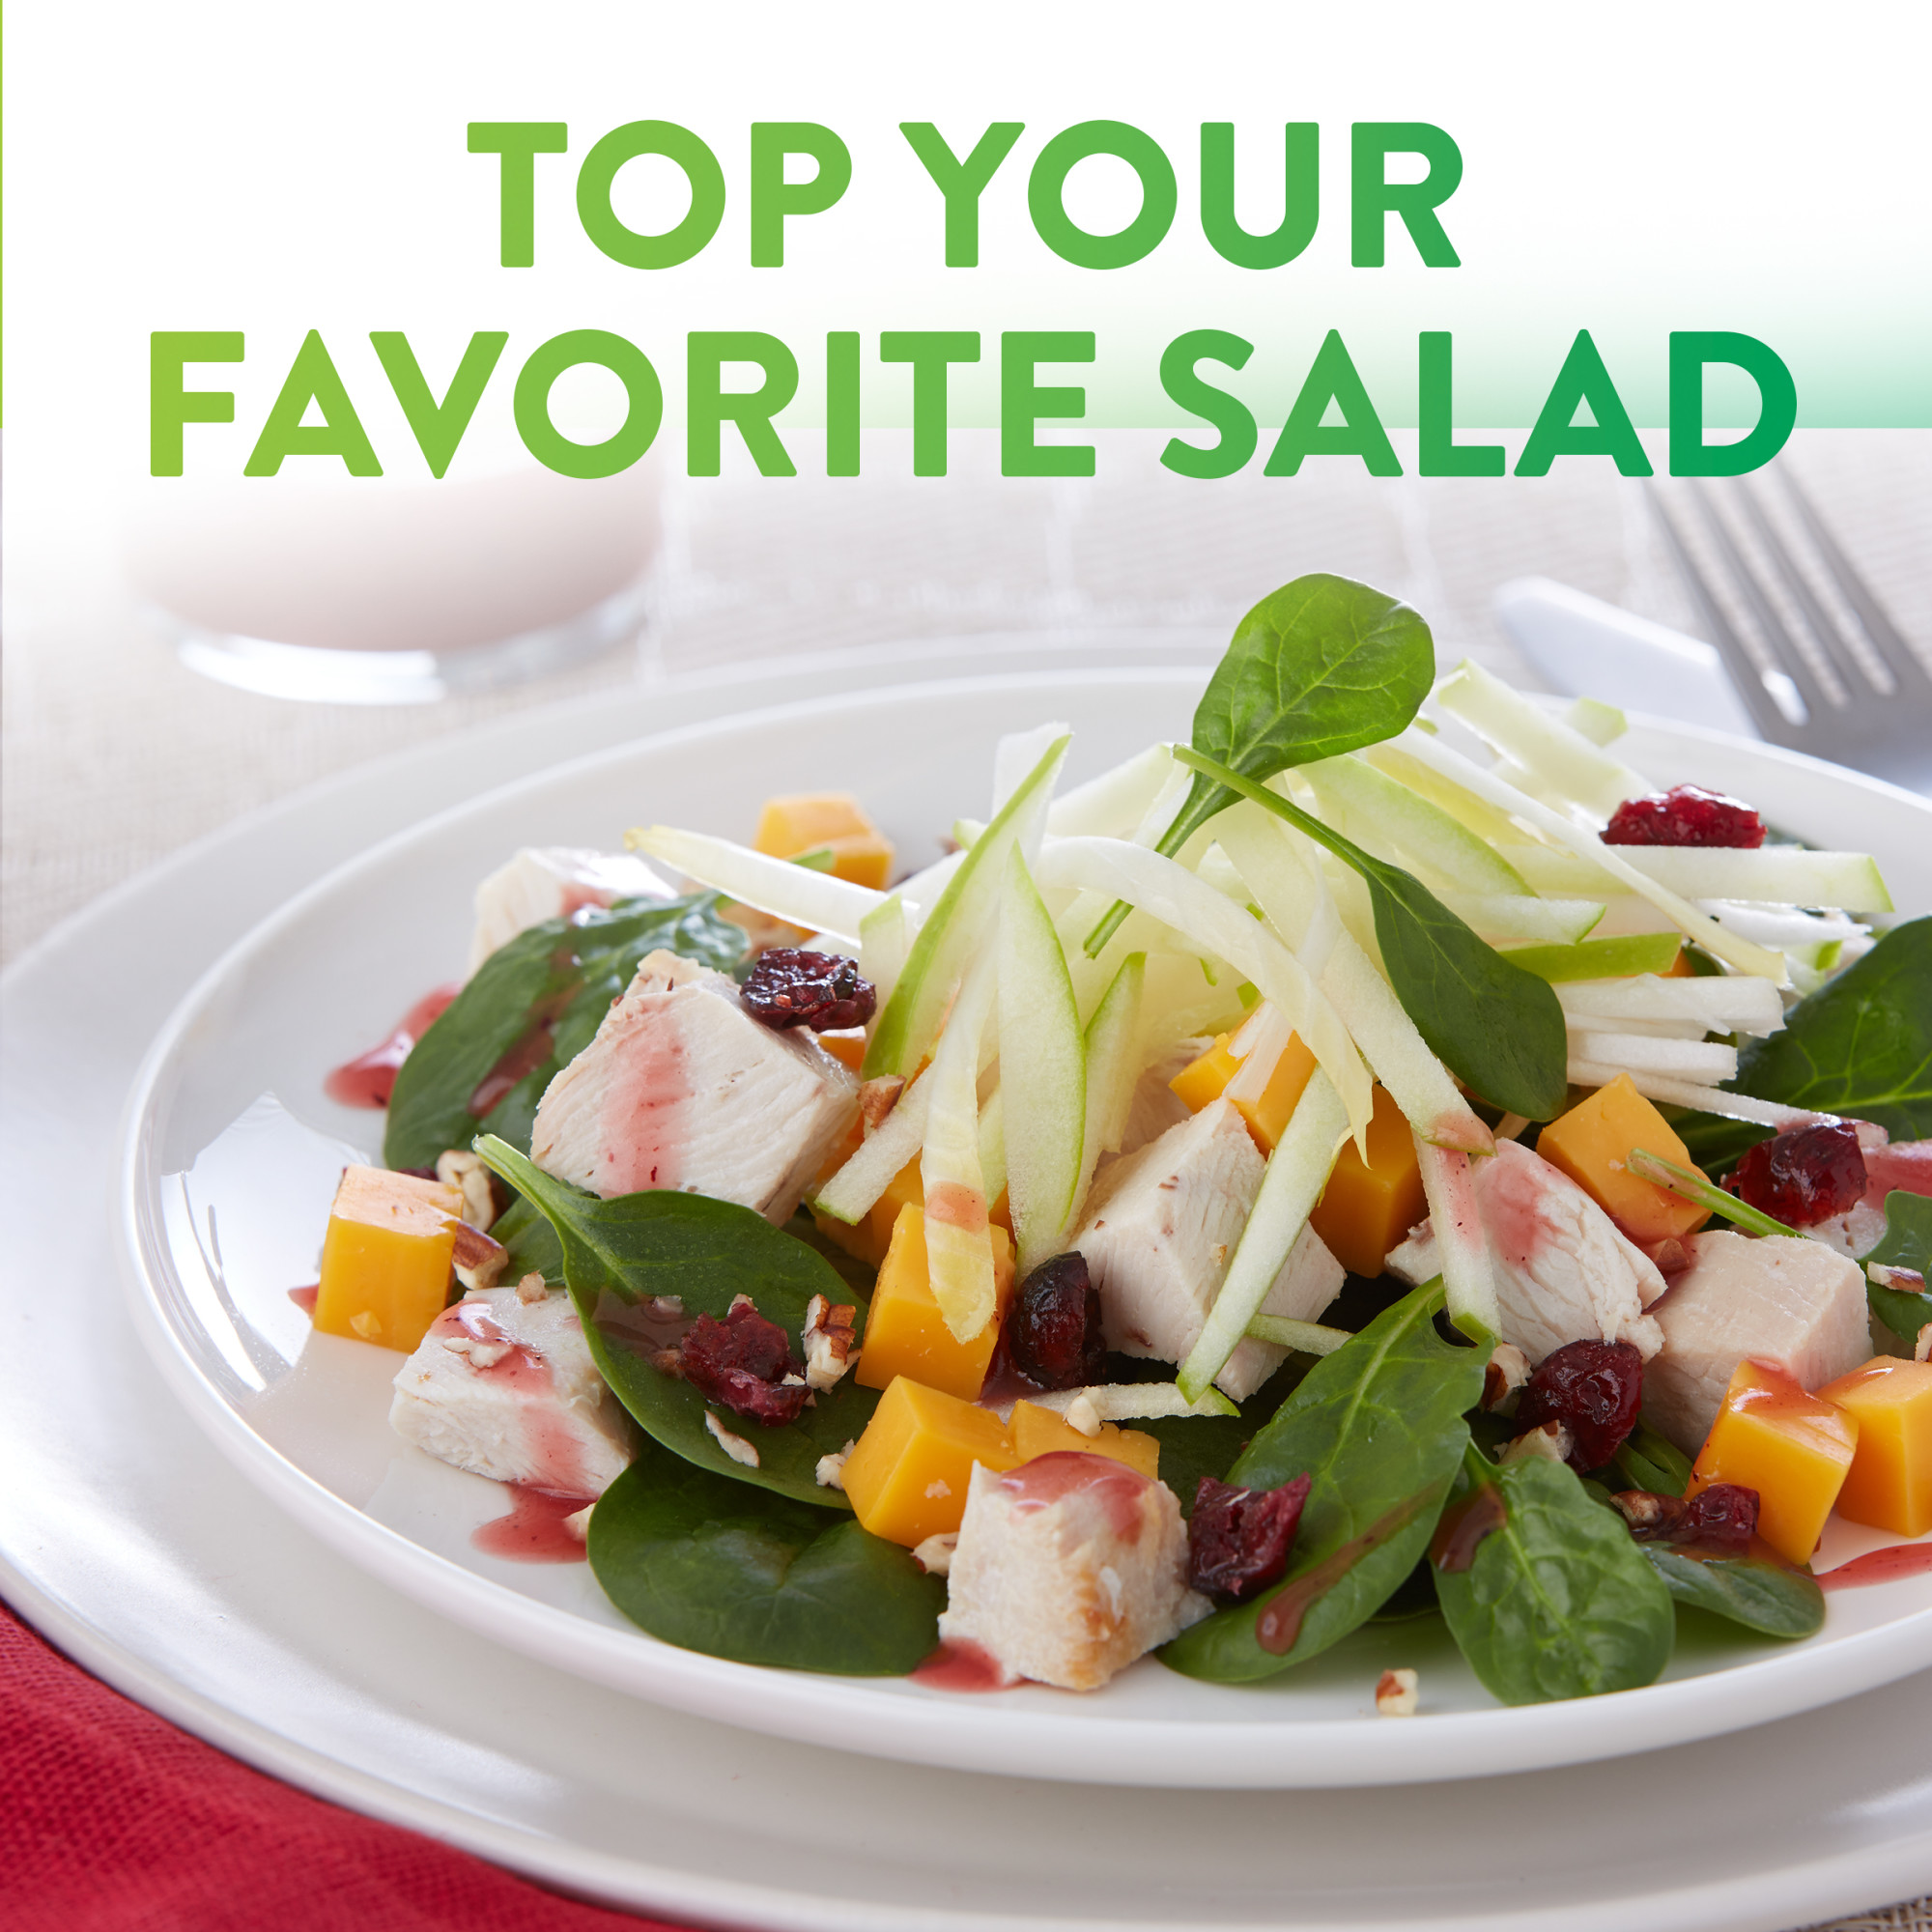 Wish-Bone Balsamic Vinaigrette Salad Dressing, 15 fl oz - image 4 of 7